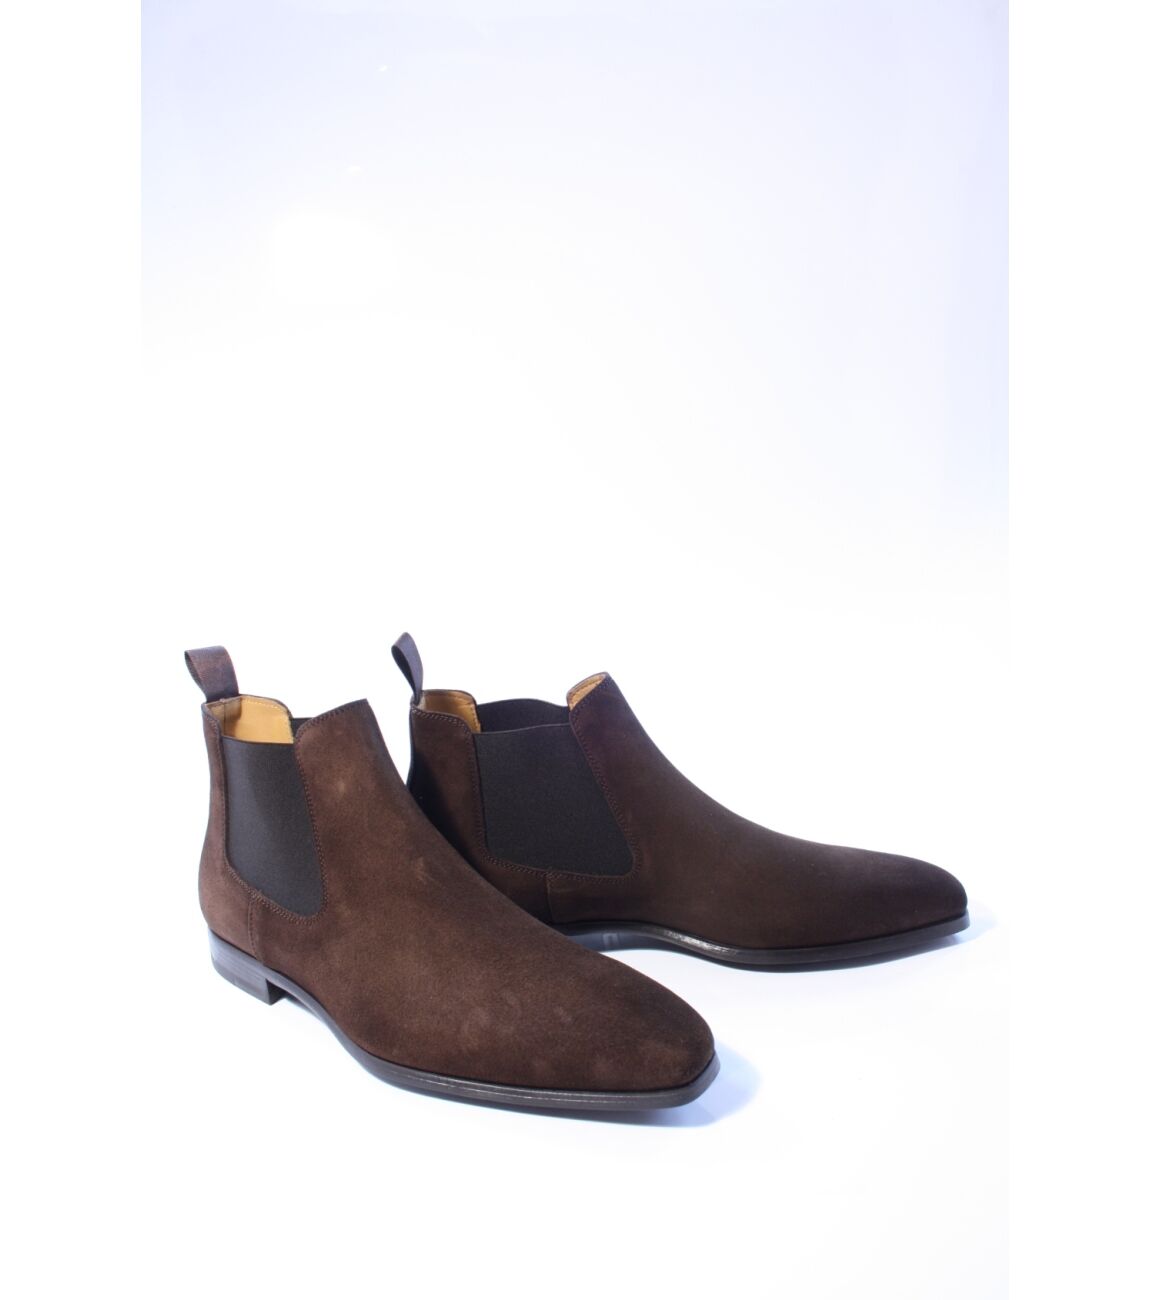 Magnanni Heren boots gekleed bruin 39